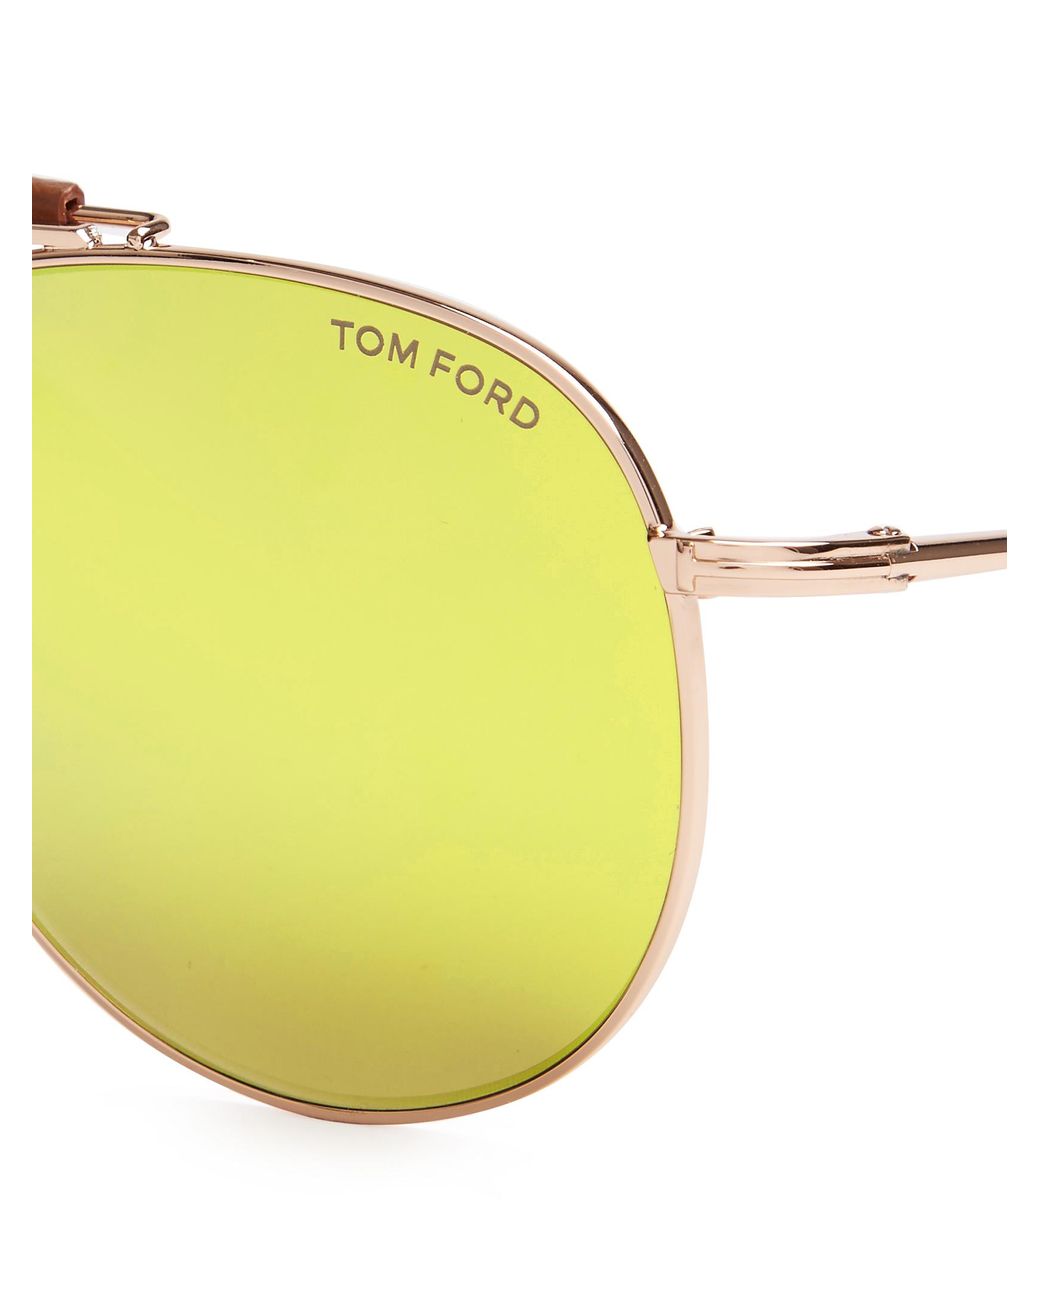 Tom Ford Sean Mirrored Aviator Sunglasses in Metallic | Lyst